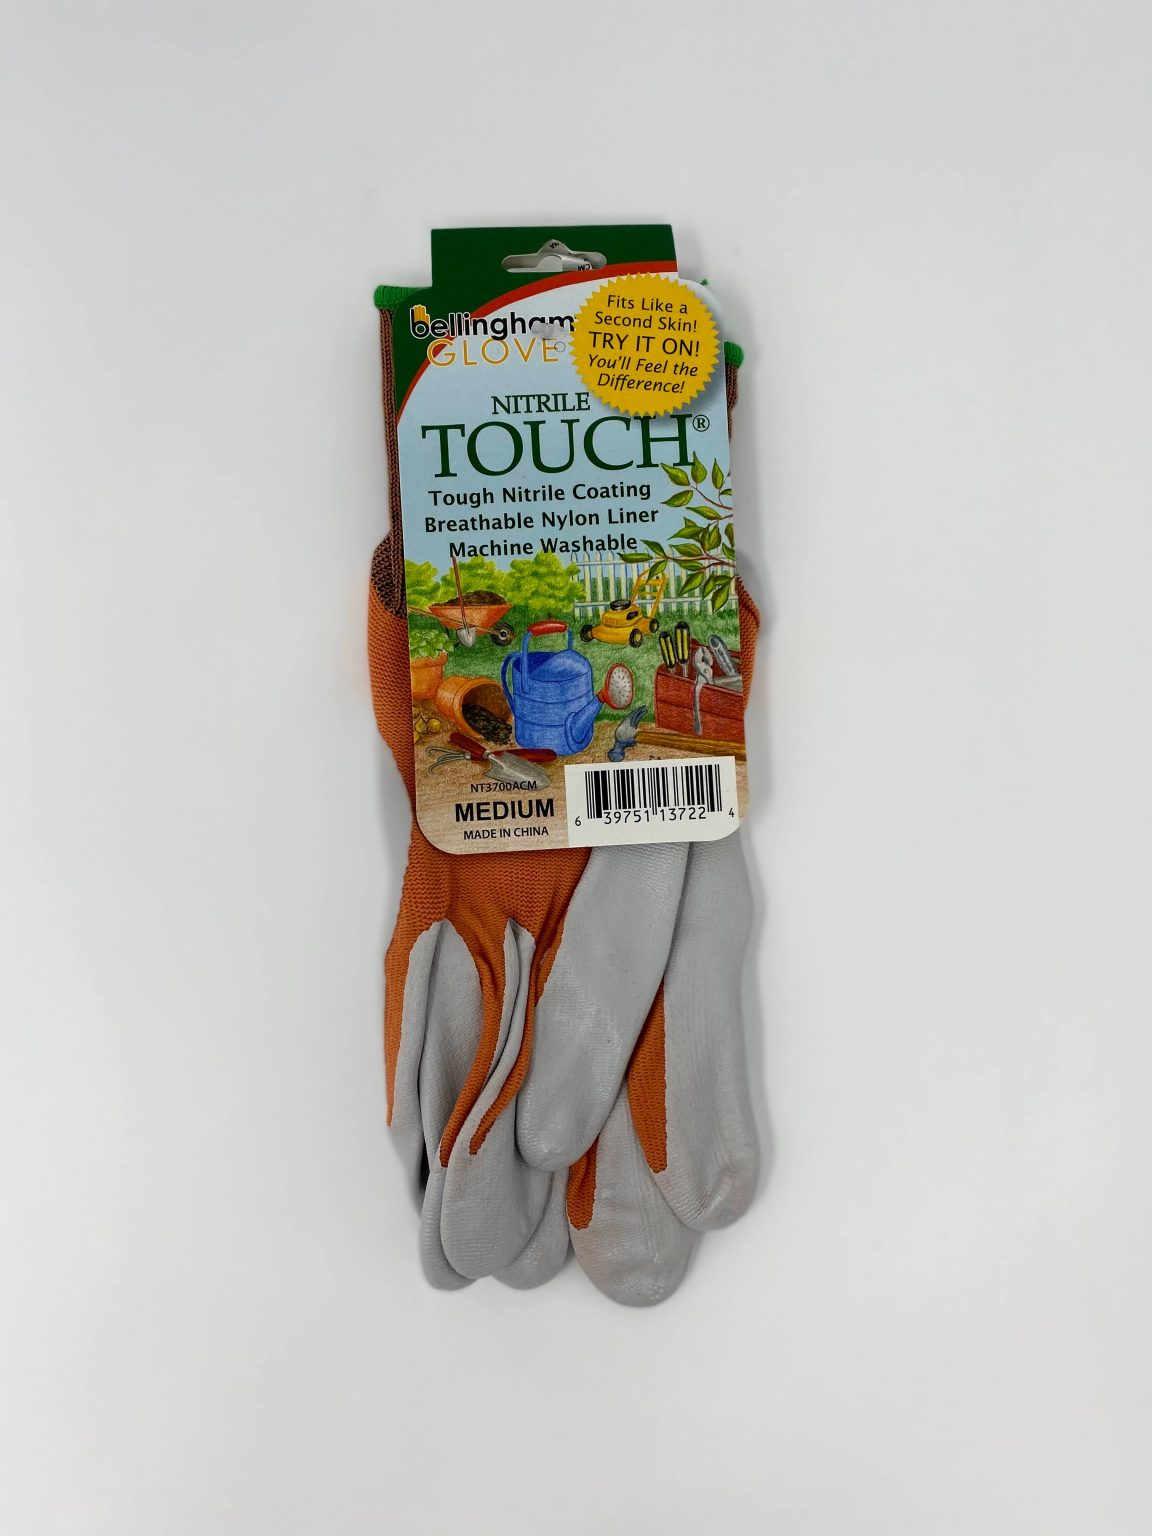 Nitrile TOUCH® Bellingham glove in orange color